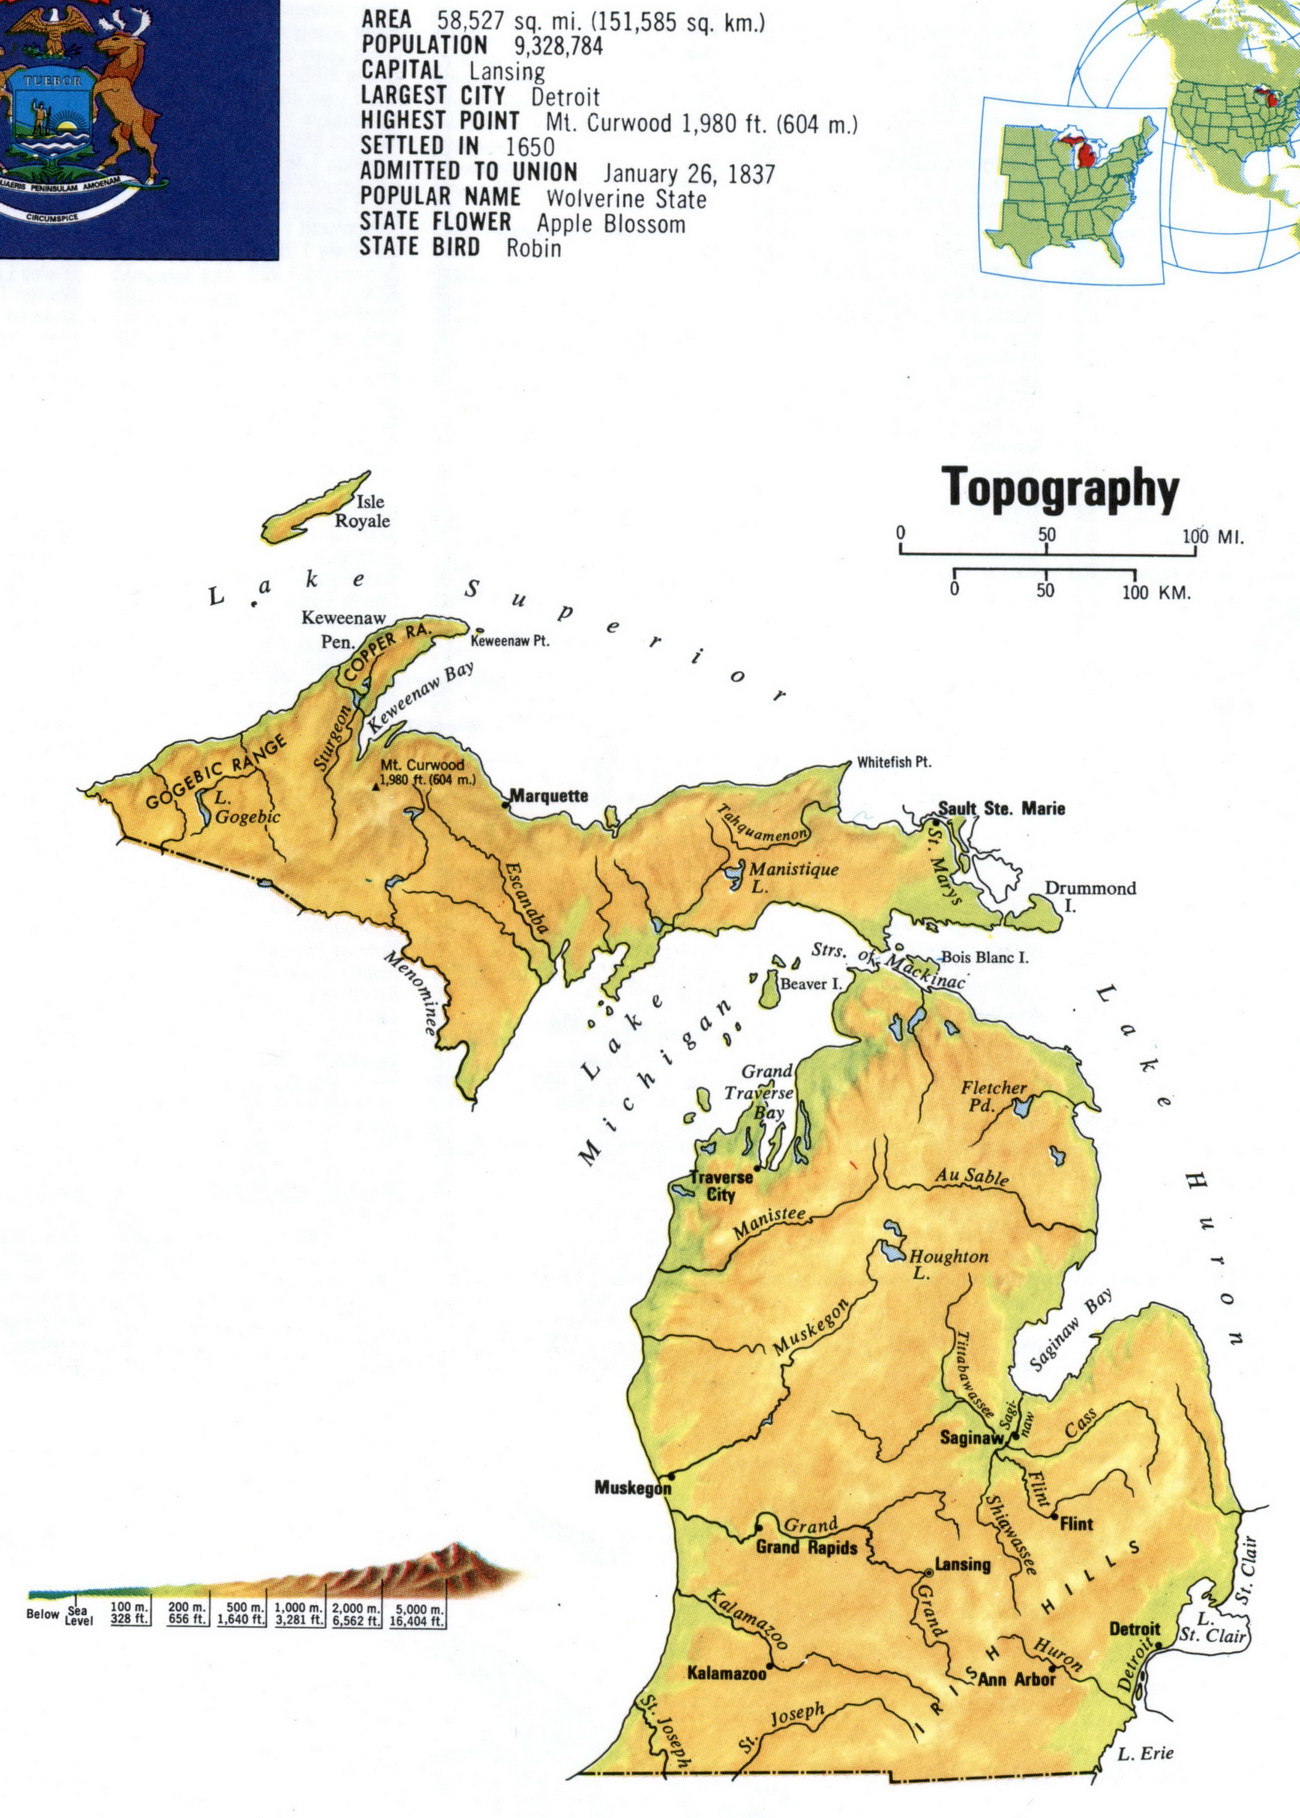 Landscape map of Michigan